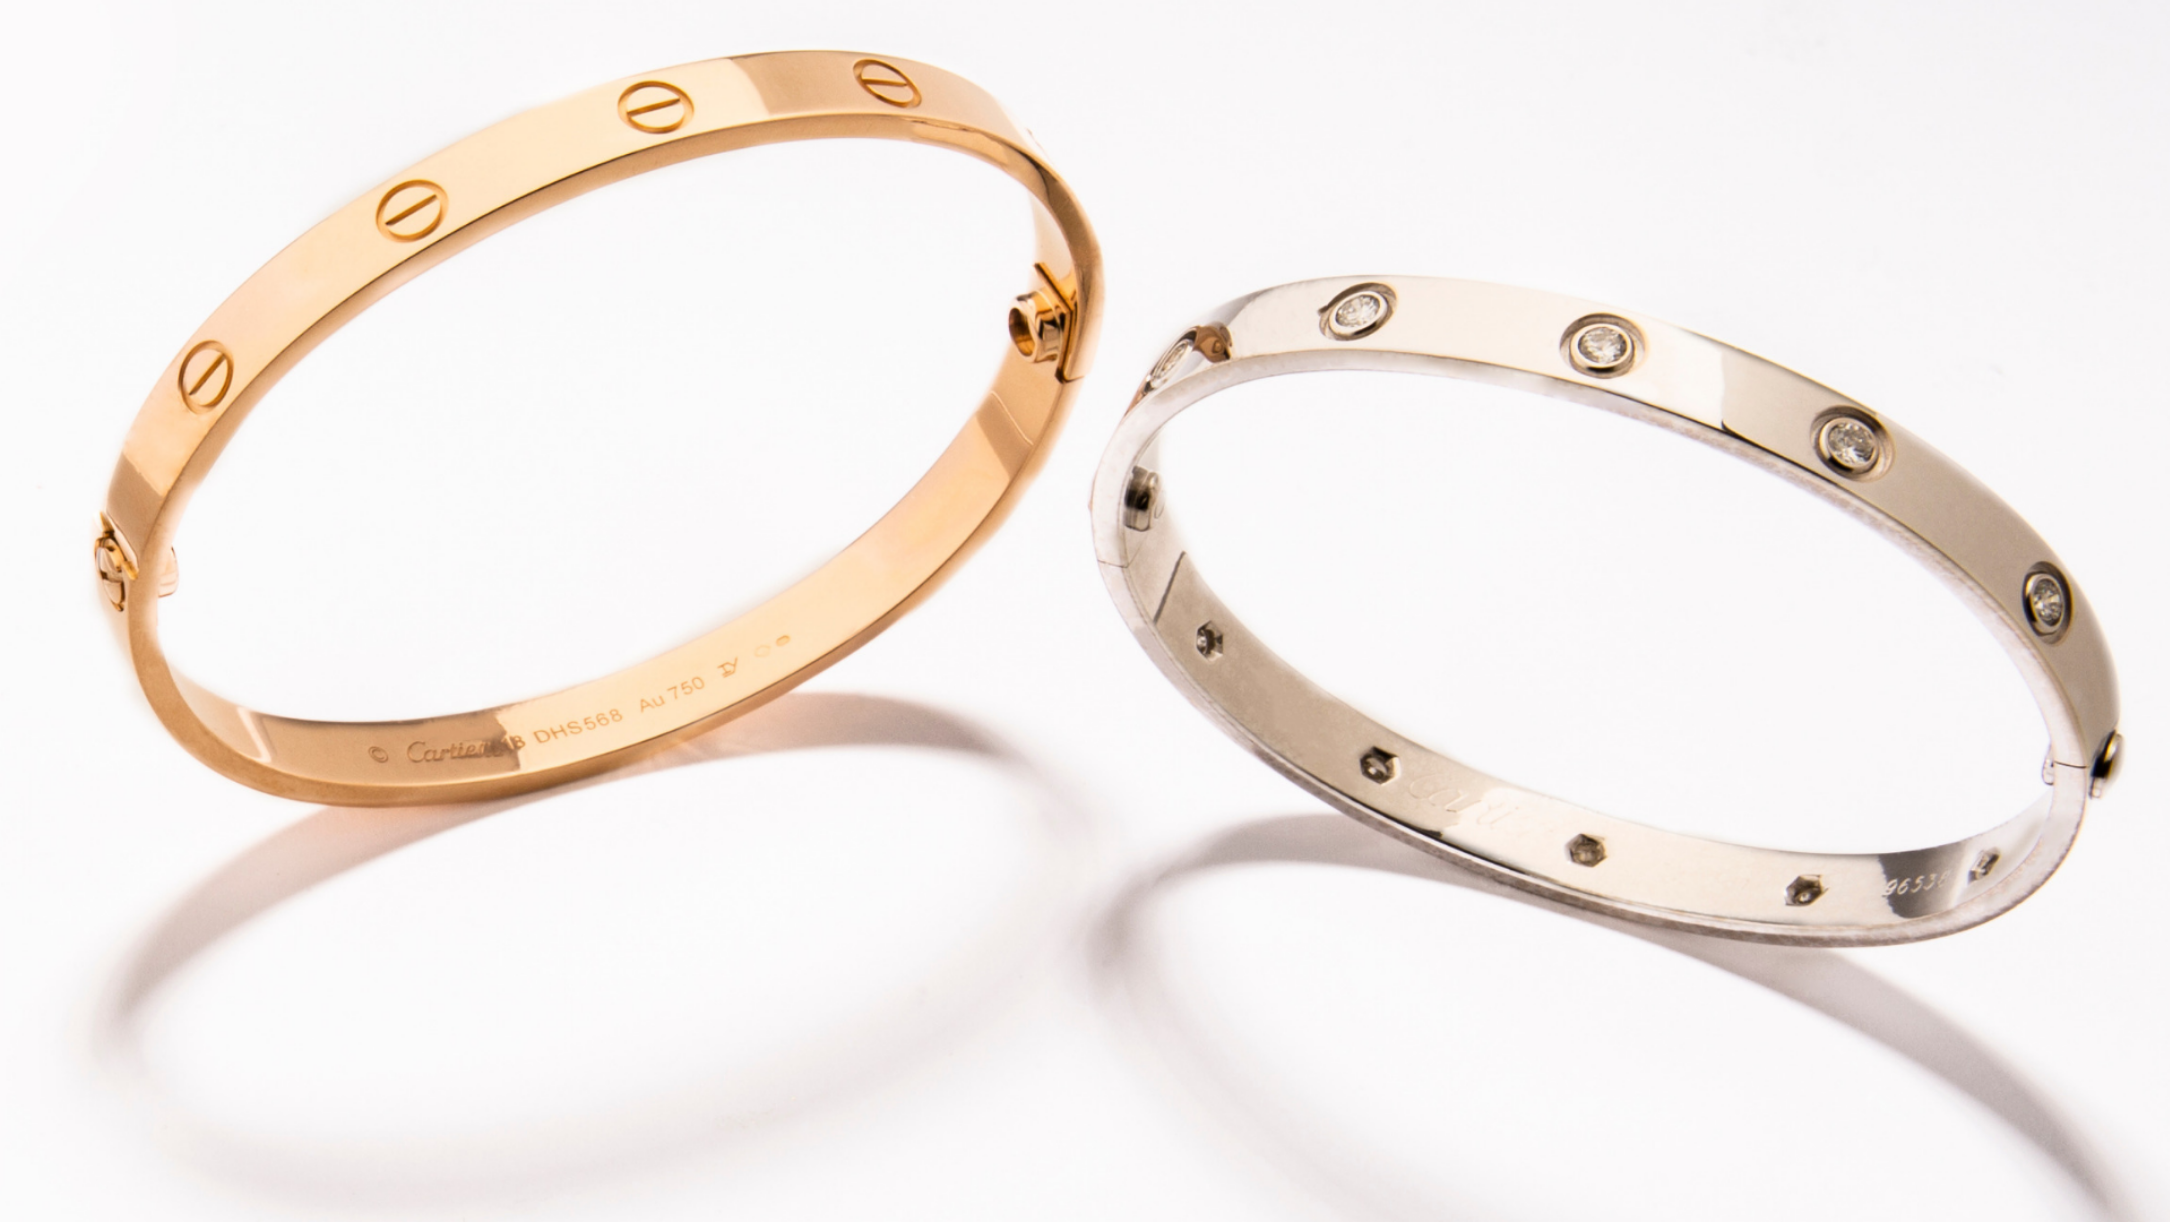 Details more than 68 cartier love bracelet usa